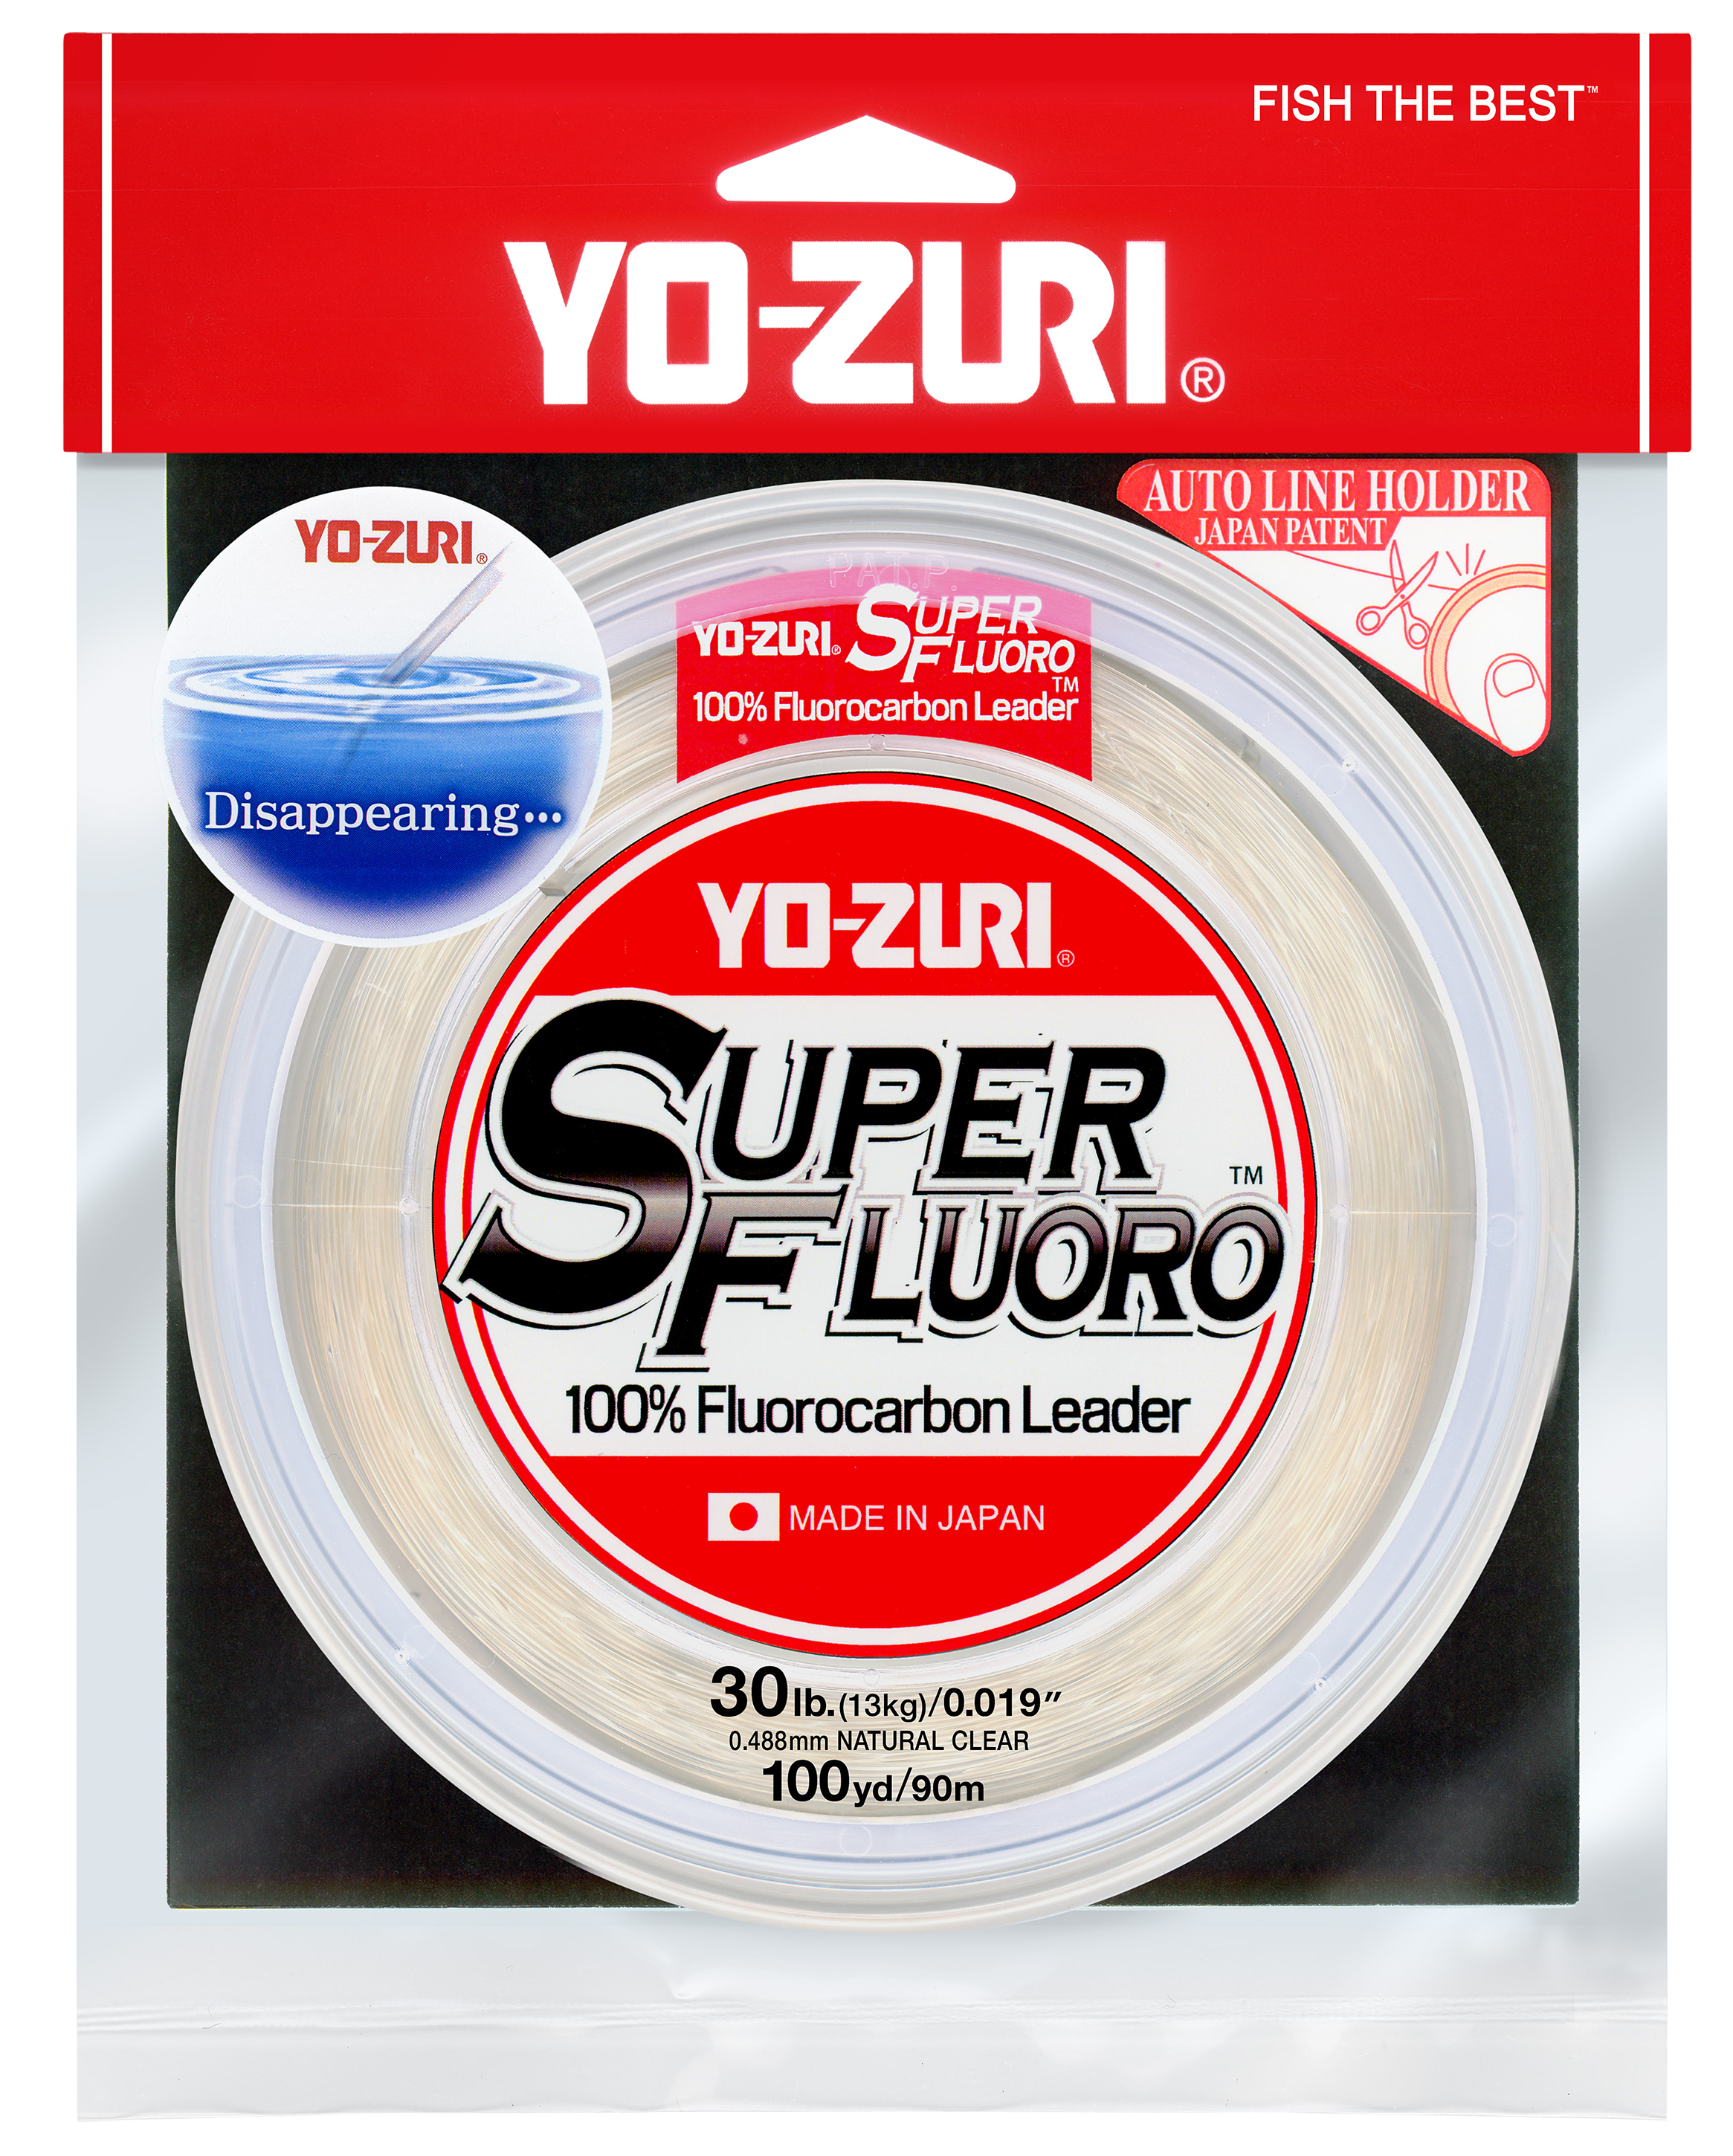 YO-ZURI HYBRID Fluorocarbon Fishing Line 12lb/600yd HIVIS NEW